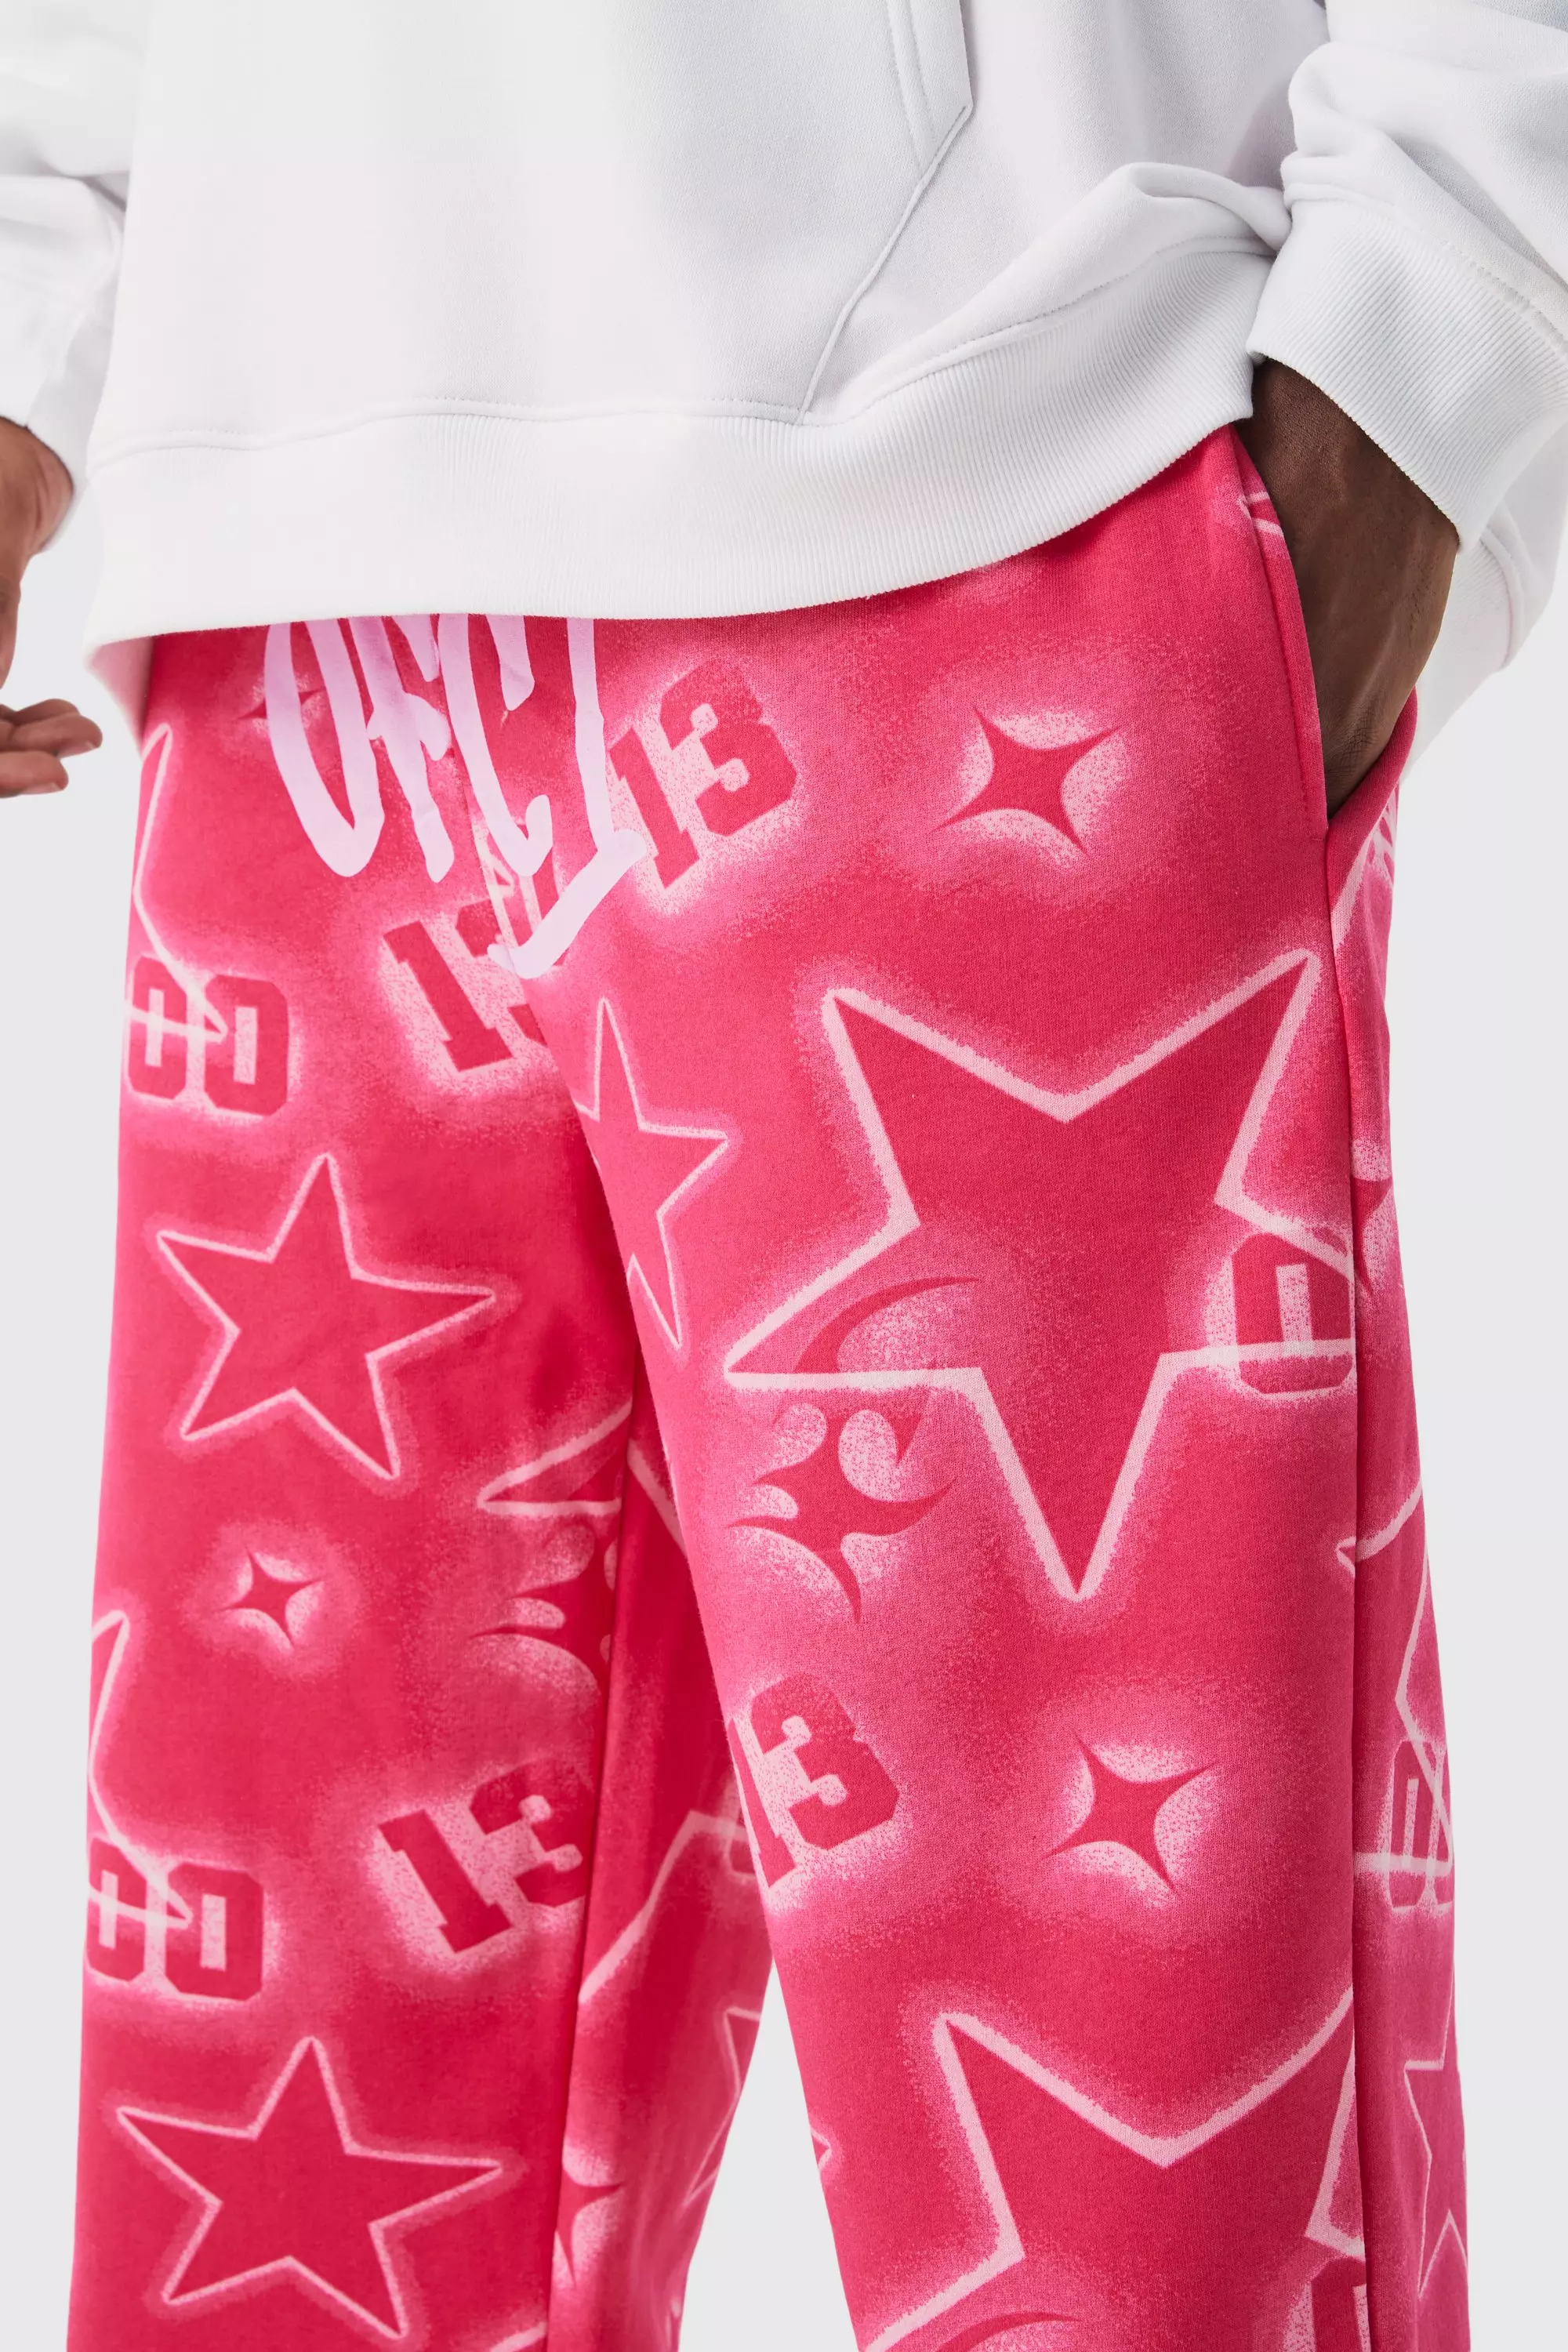 Sam Beach Corporation, relaxed fit, multi coloured, graffiti pants – Dibkast